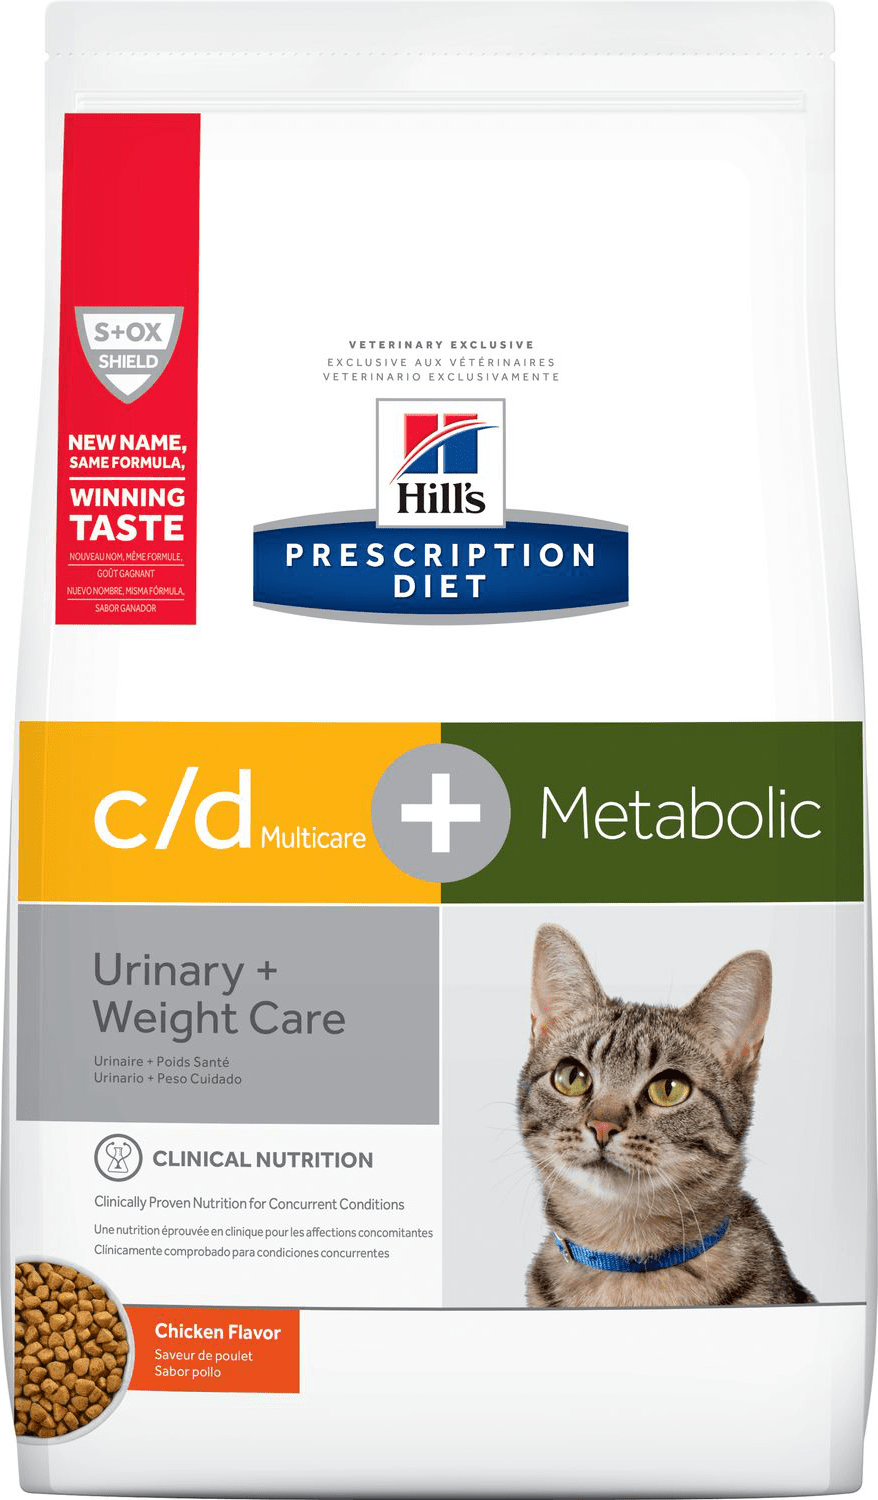 Hill's Prescription Diet C-d Multicare + Metabolic (Dry)